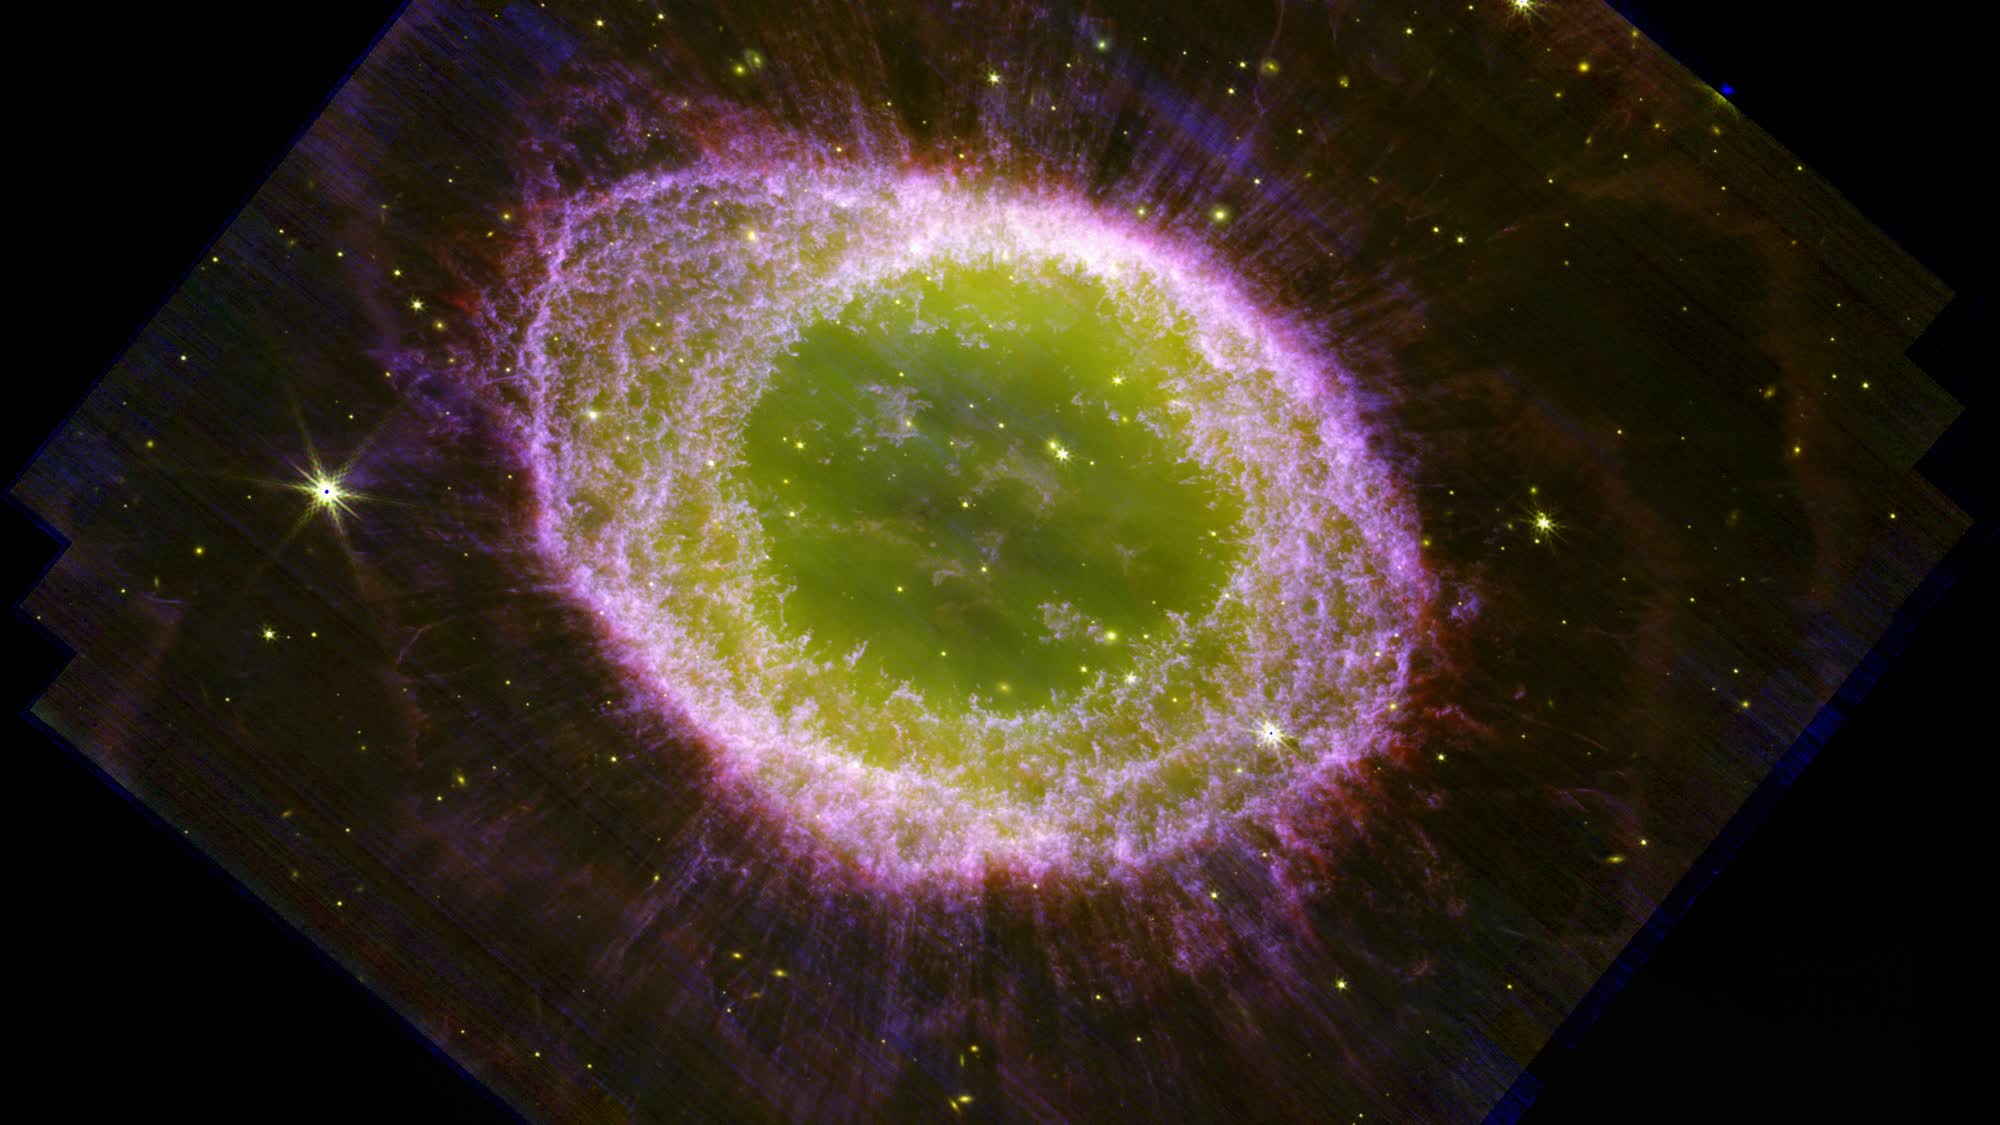 Webb telescope images Ring Nebula in brilliant detail